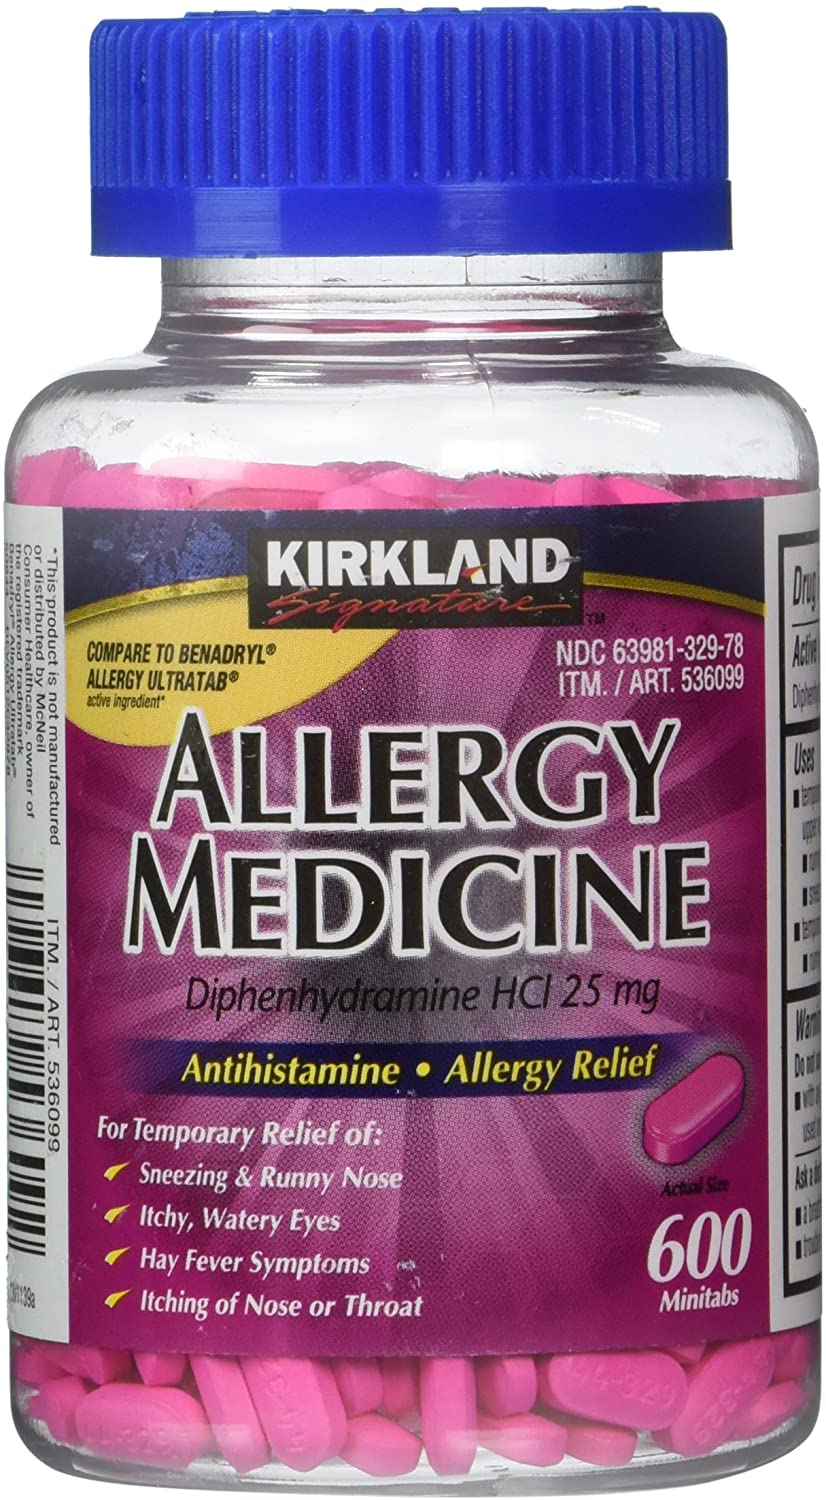 Diphenhydramine HCI 25 Mg – Kirkland Brand – Allergy Medicine Antihistamine $11.79 (REG $19.99)